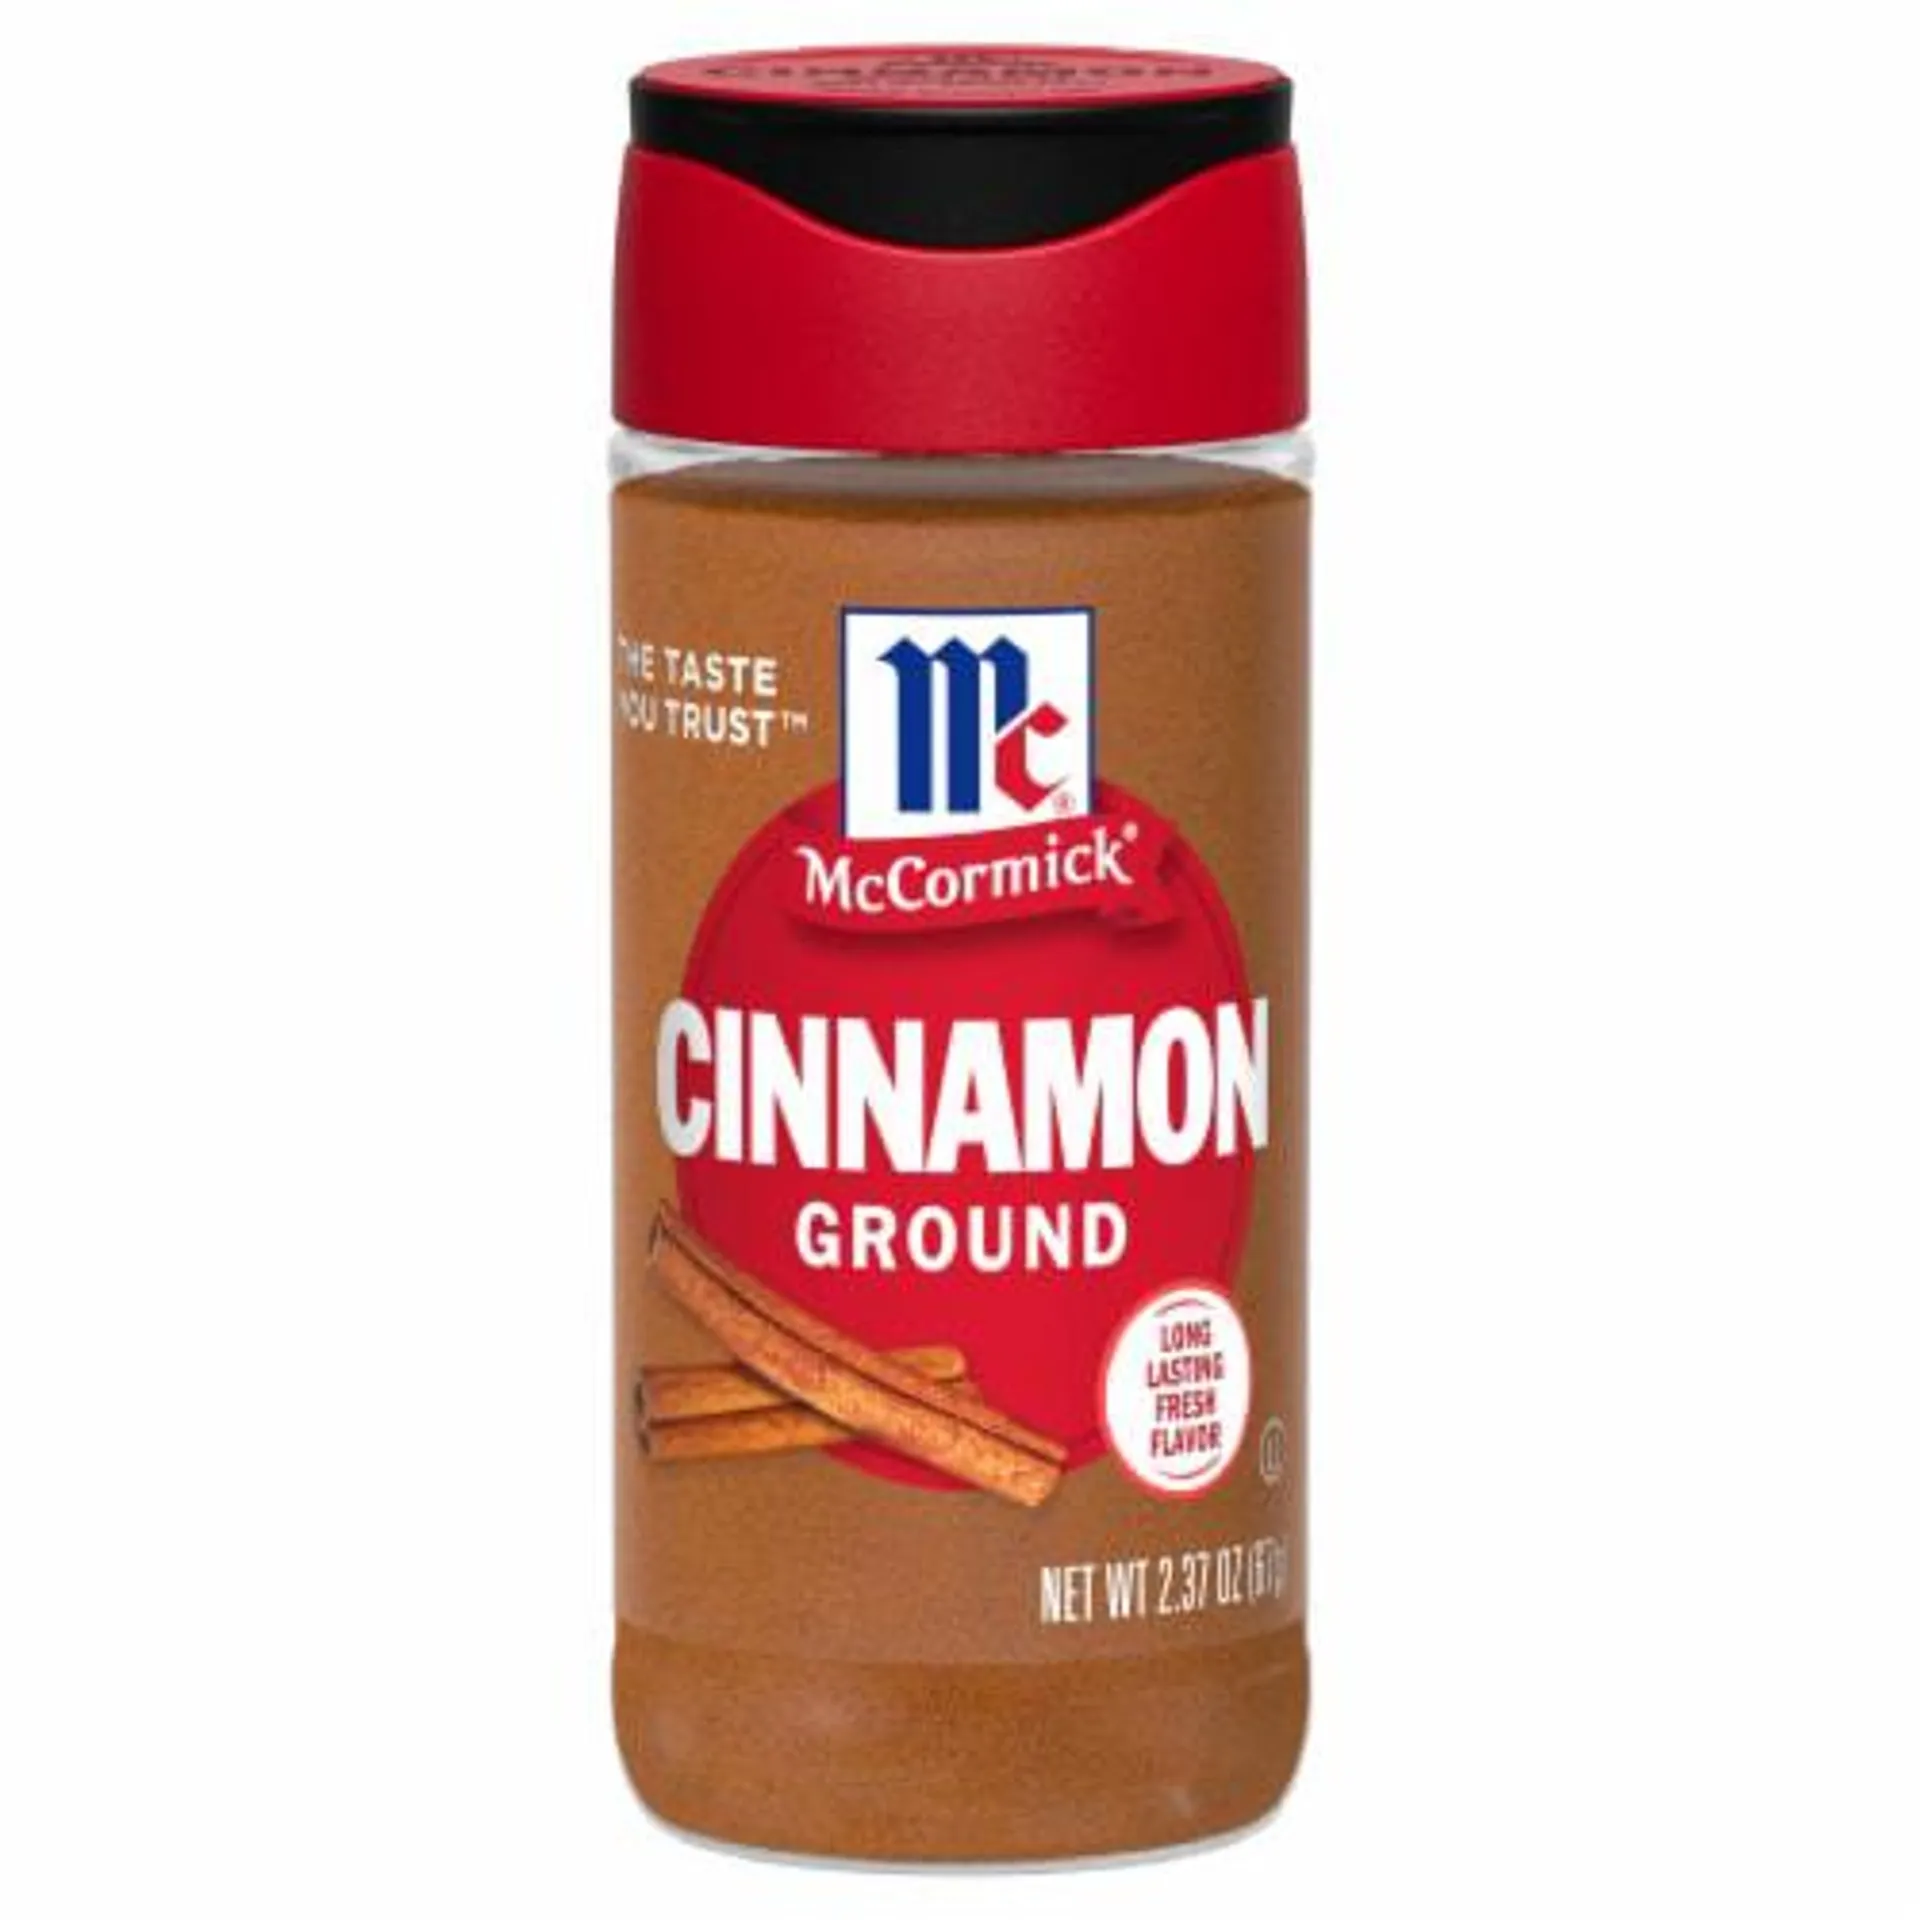 McCormick® Ground Cinnamon